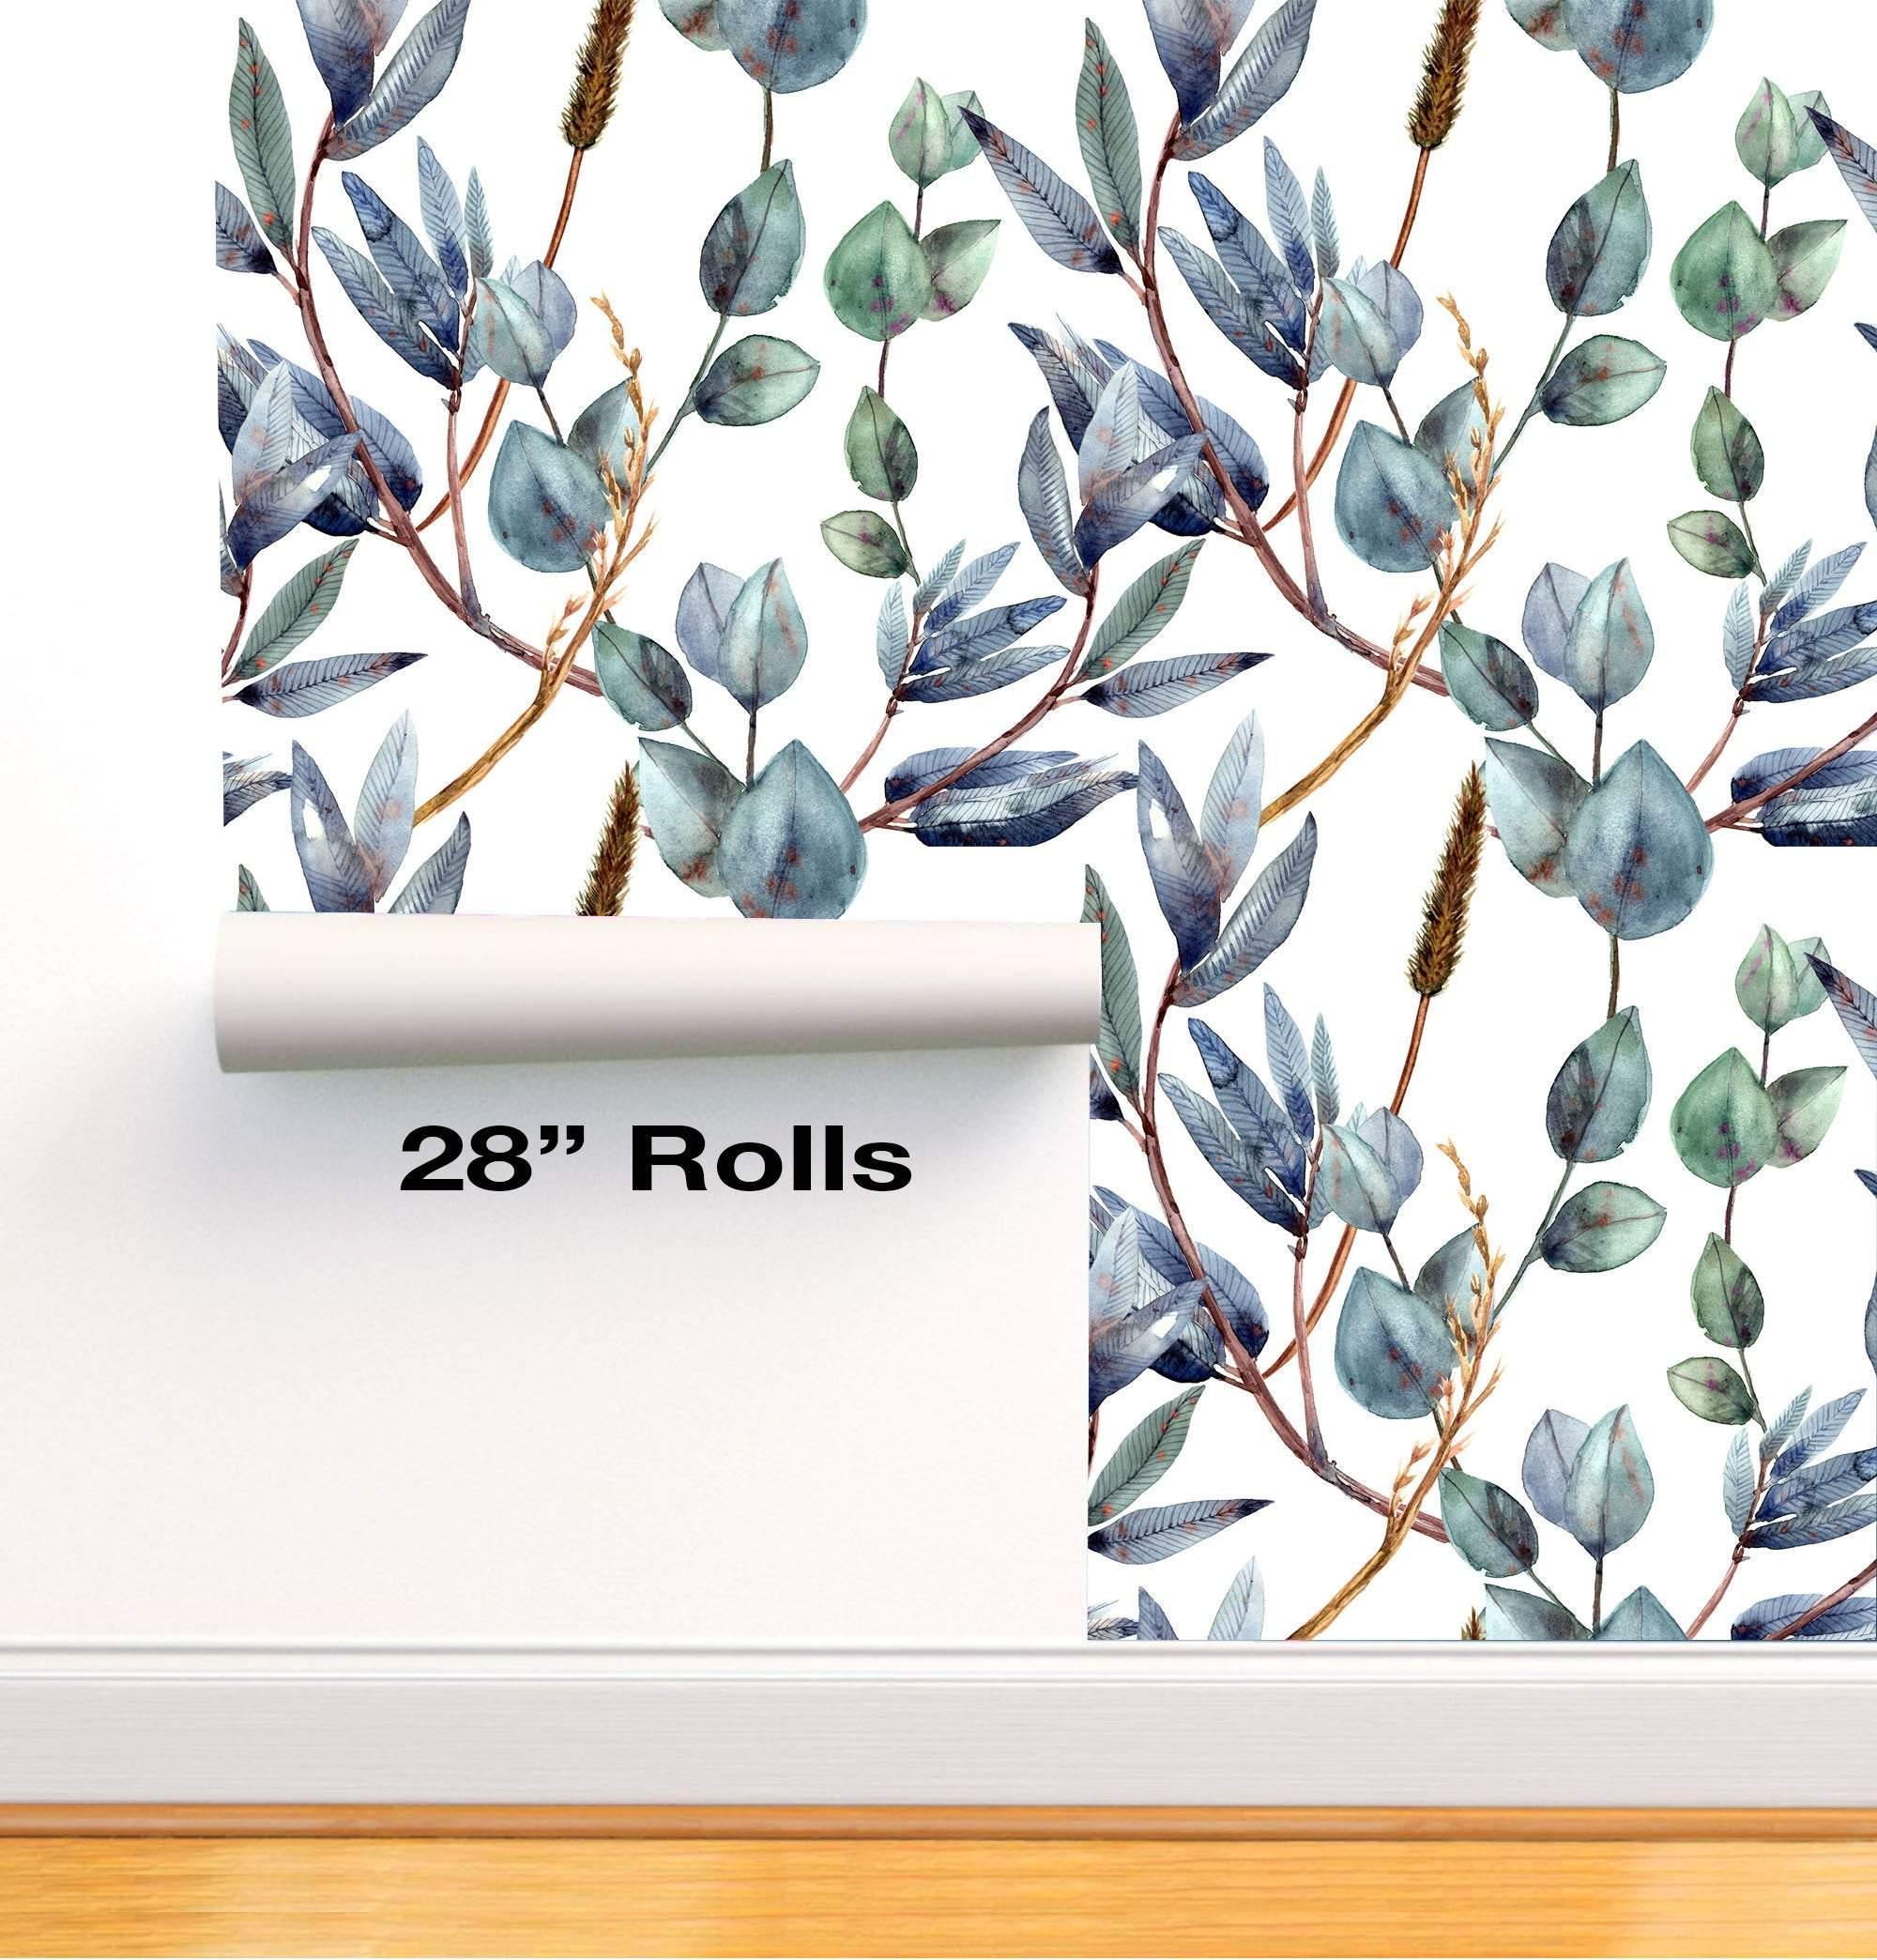 Yellow bird in blue ferns Removable Wallpaper in 28" Rolls